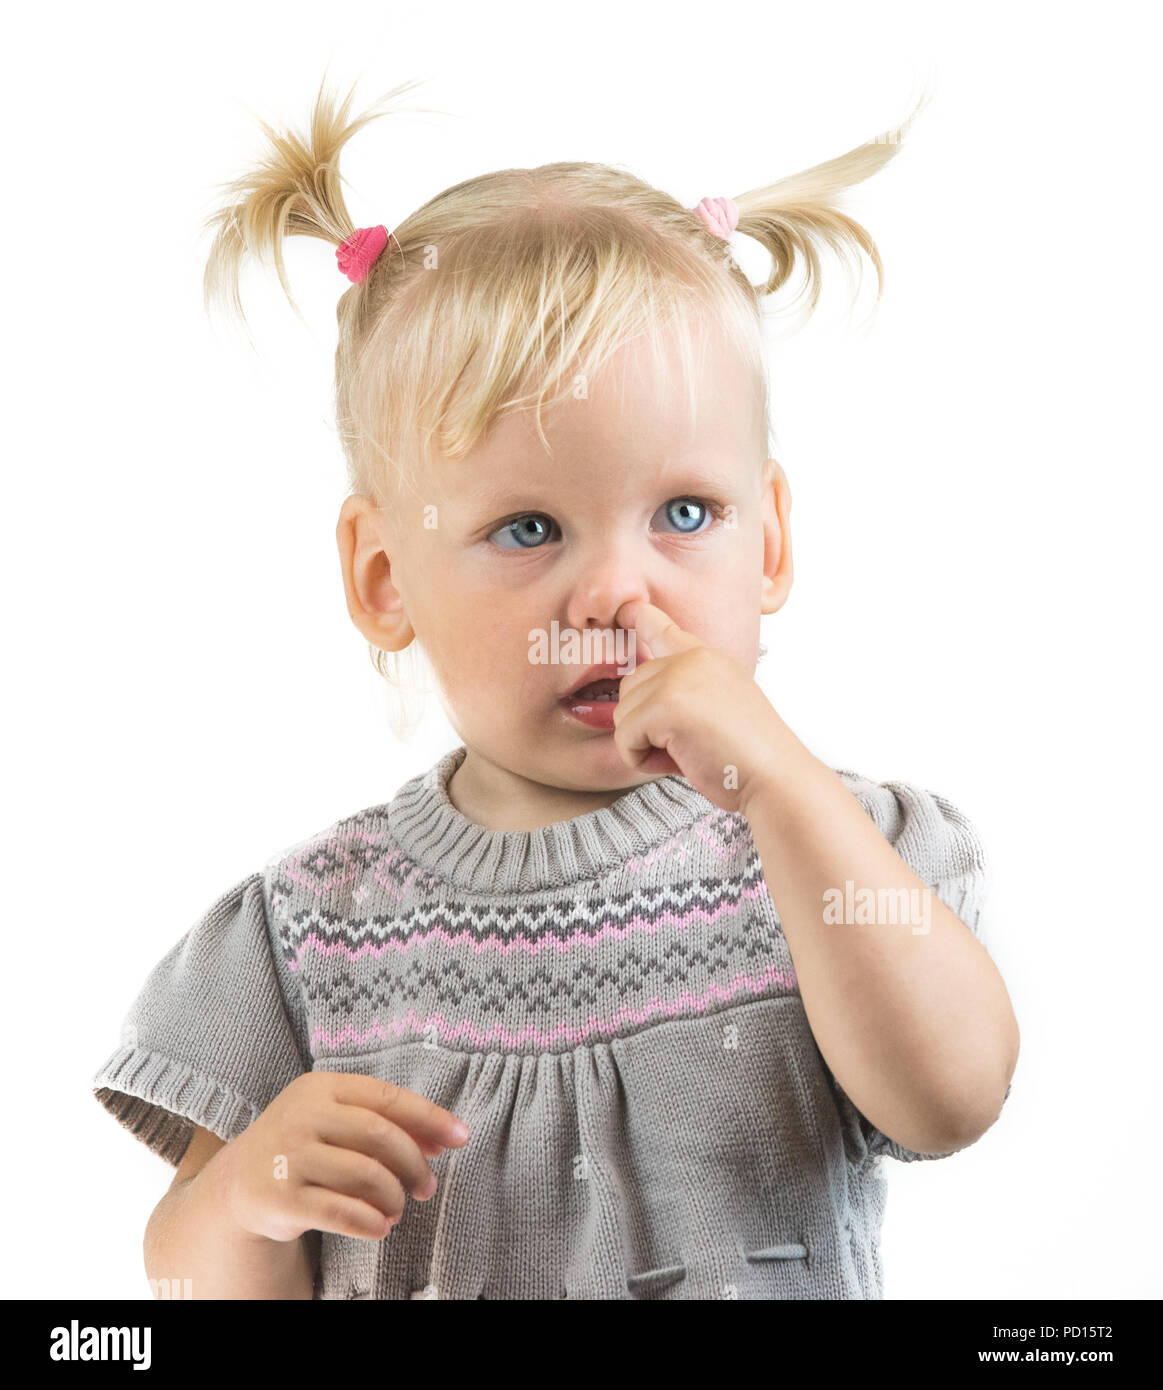 baby picking nose child portrait Stock Photo